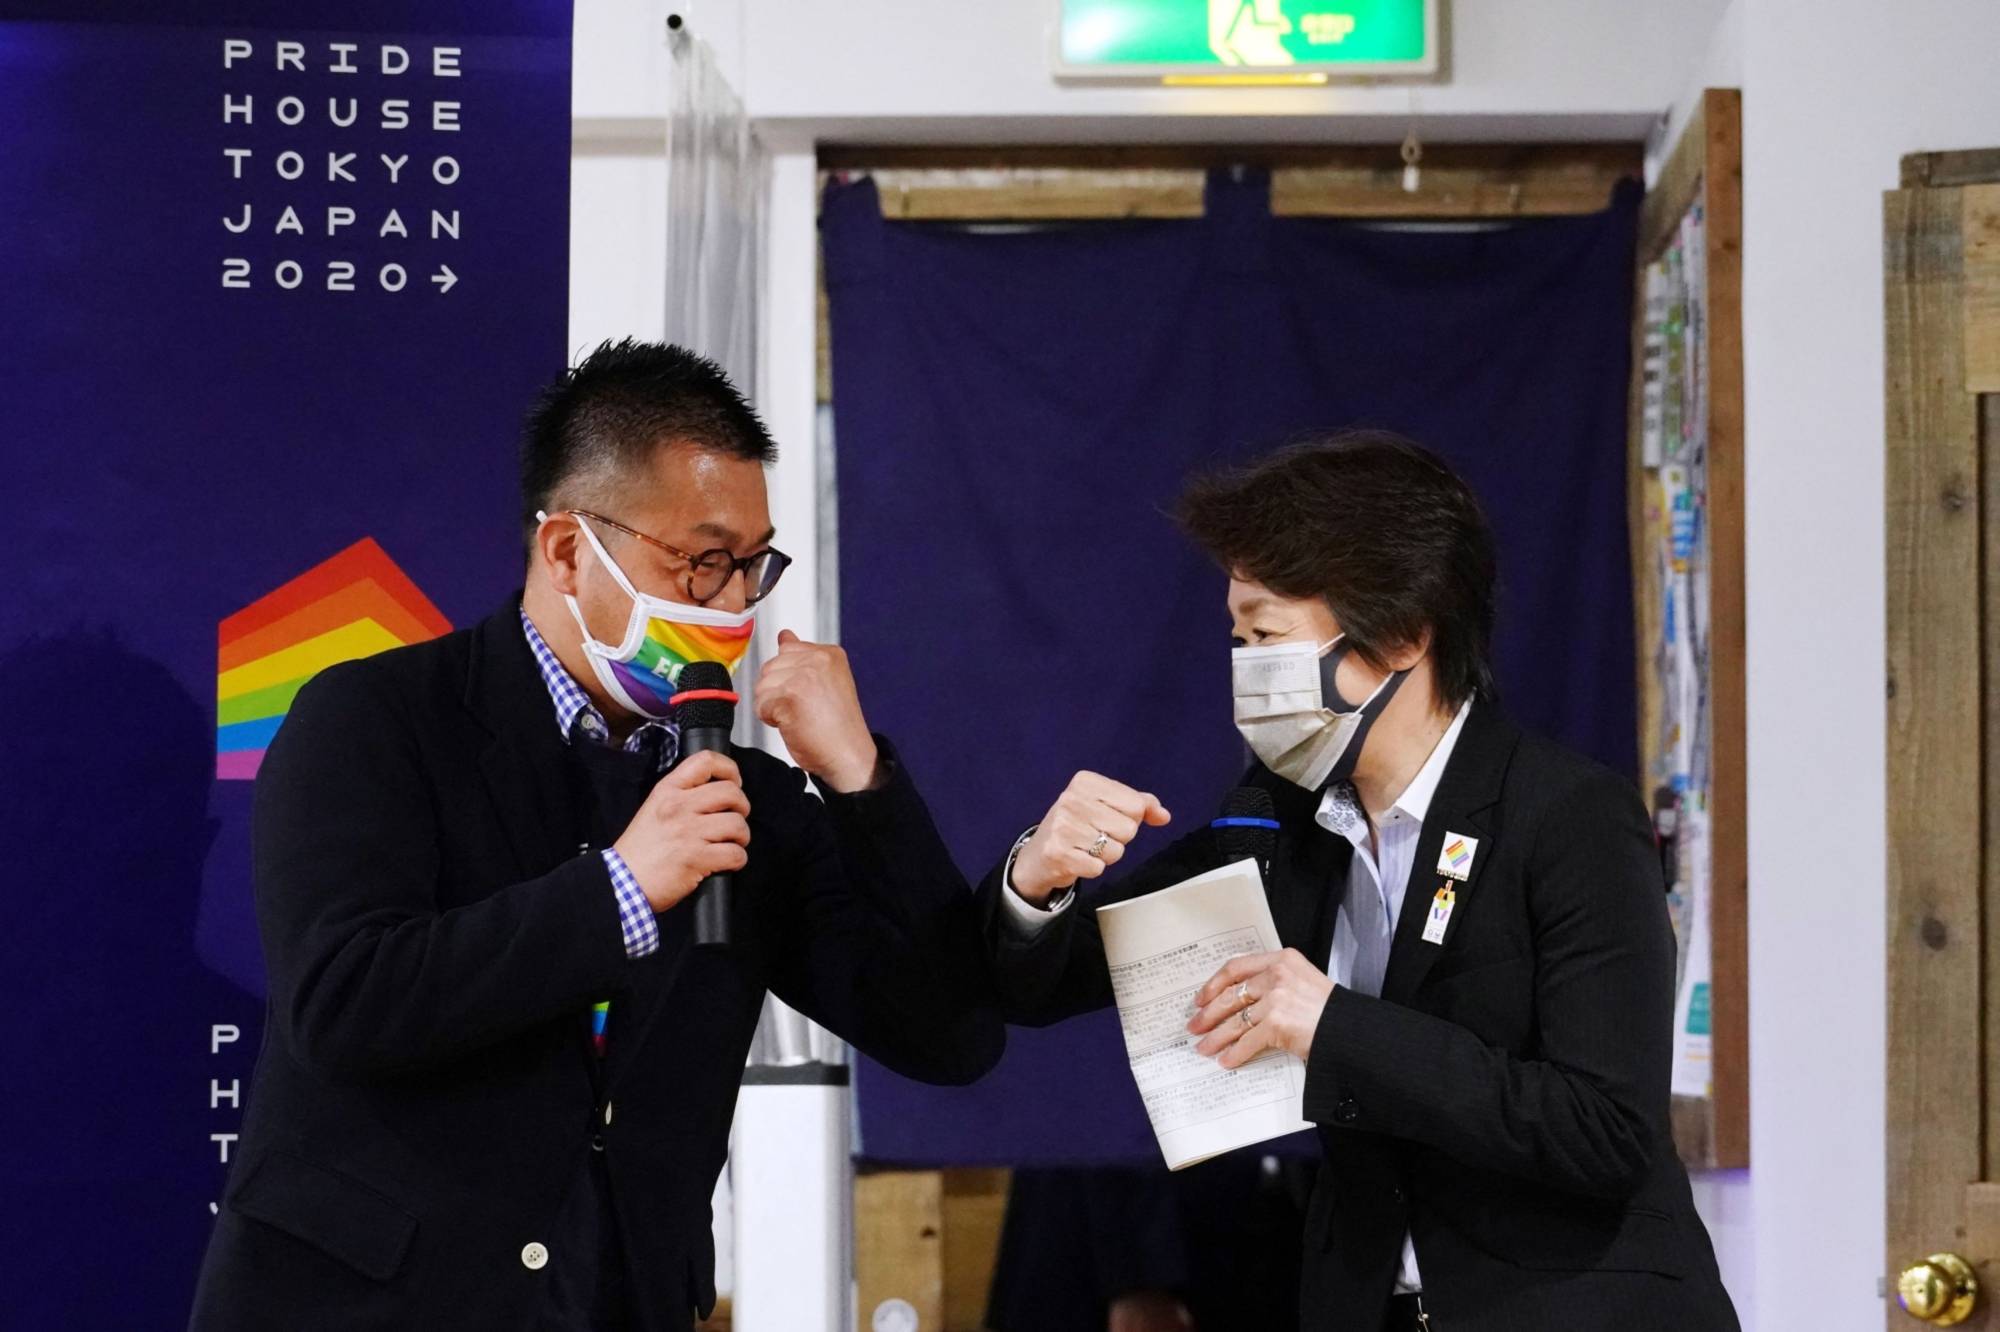 Tokyo 2020 chief Seiko Hashimoto (right) and Gon Matsunaka, head of Pride House Tokyo Legacy, greet each another at Pride House Tokyo Legacy in Tokyo on April 27. | GETTY IMAGES / VIA BLOOMBERG